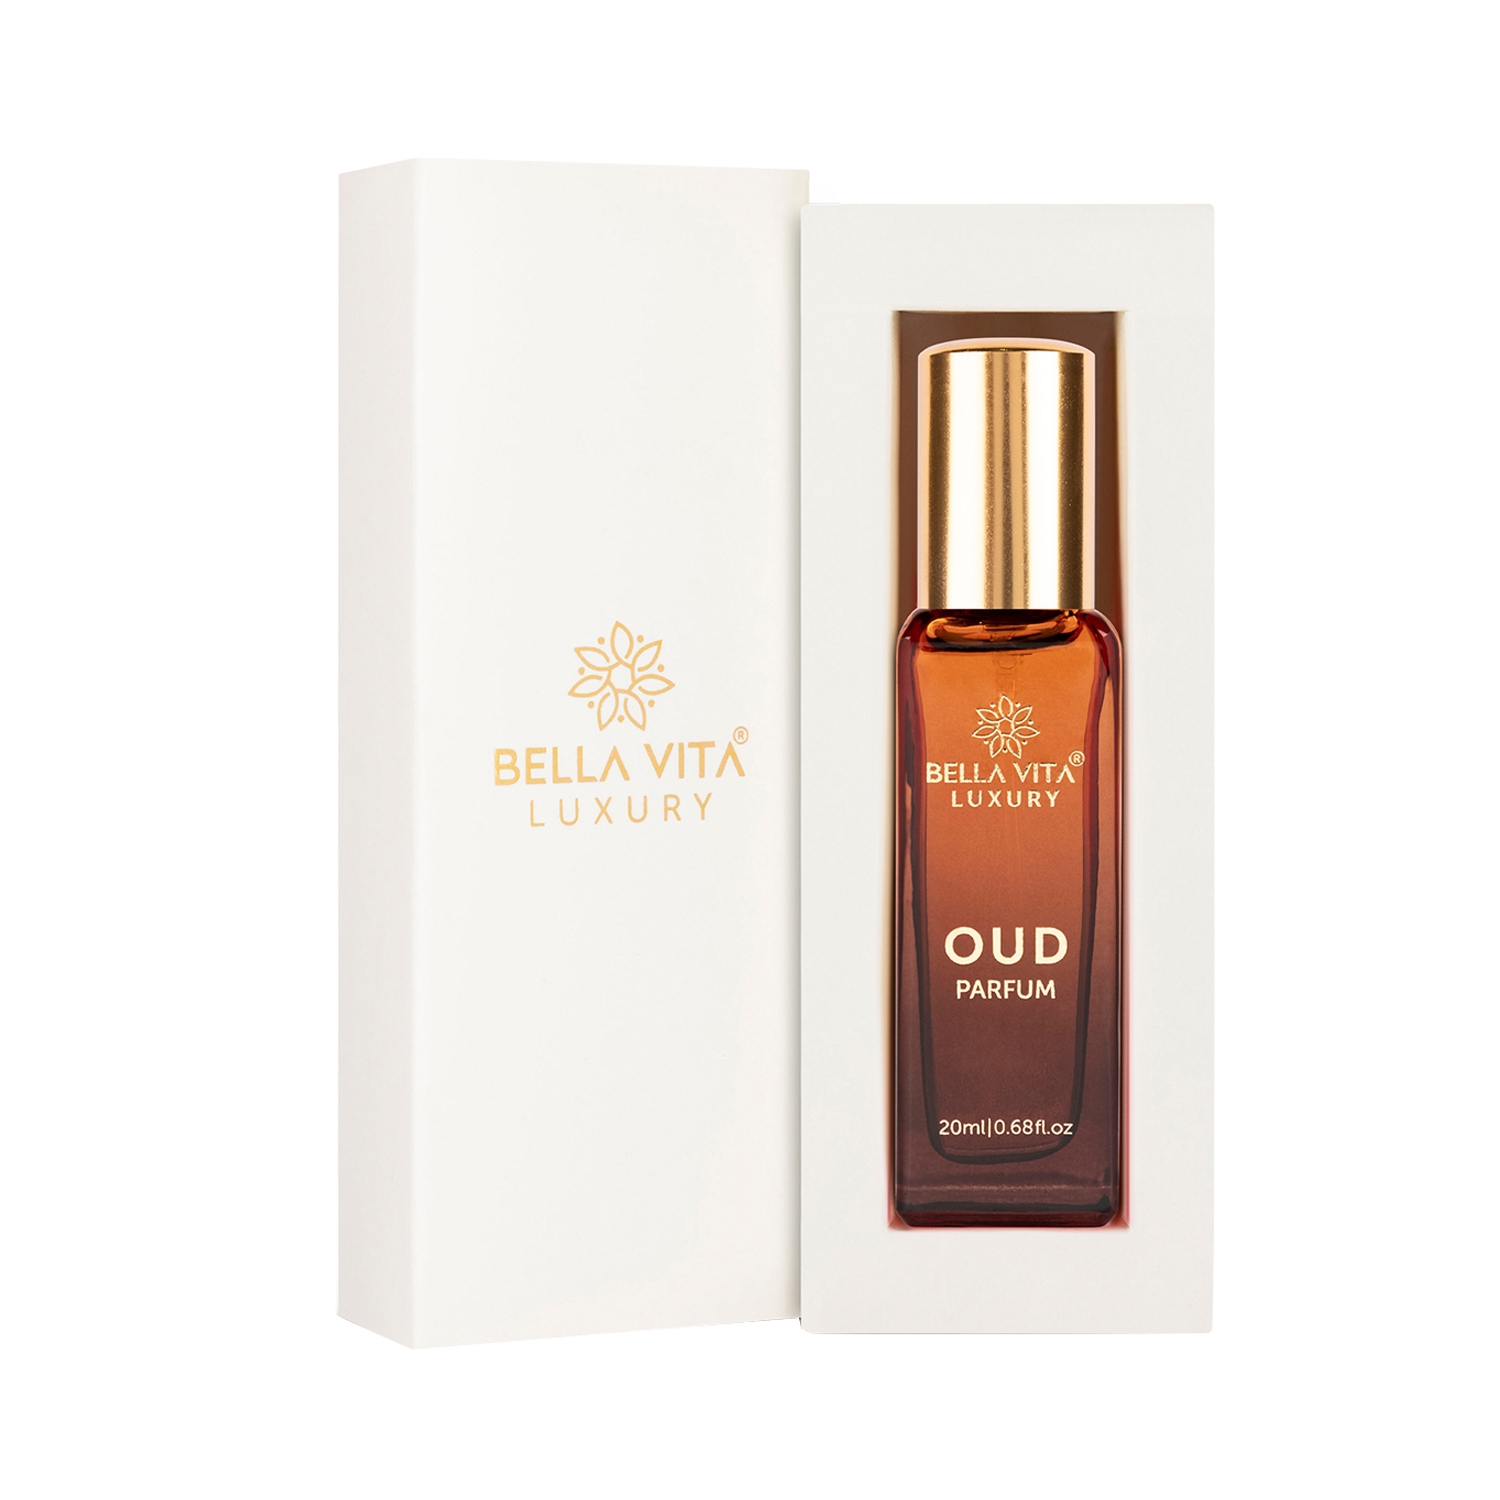 Bella Vita | Bella Vita Luxury Oud Parfum (20ml)